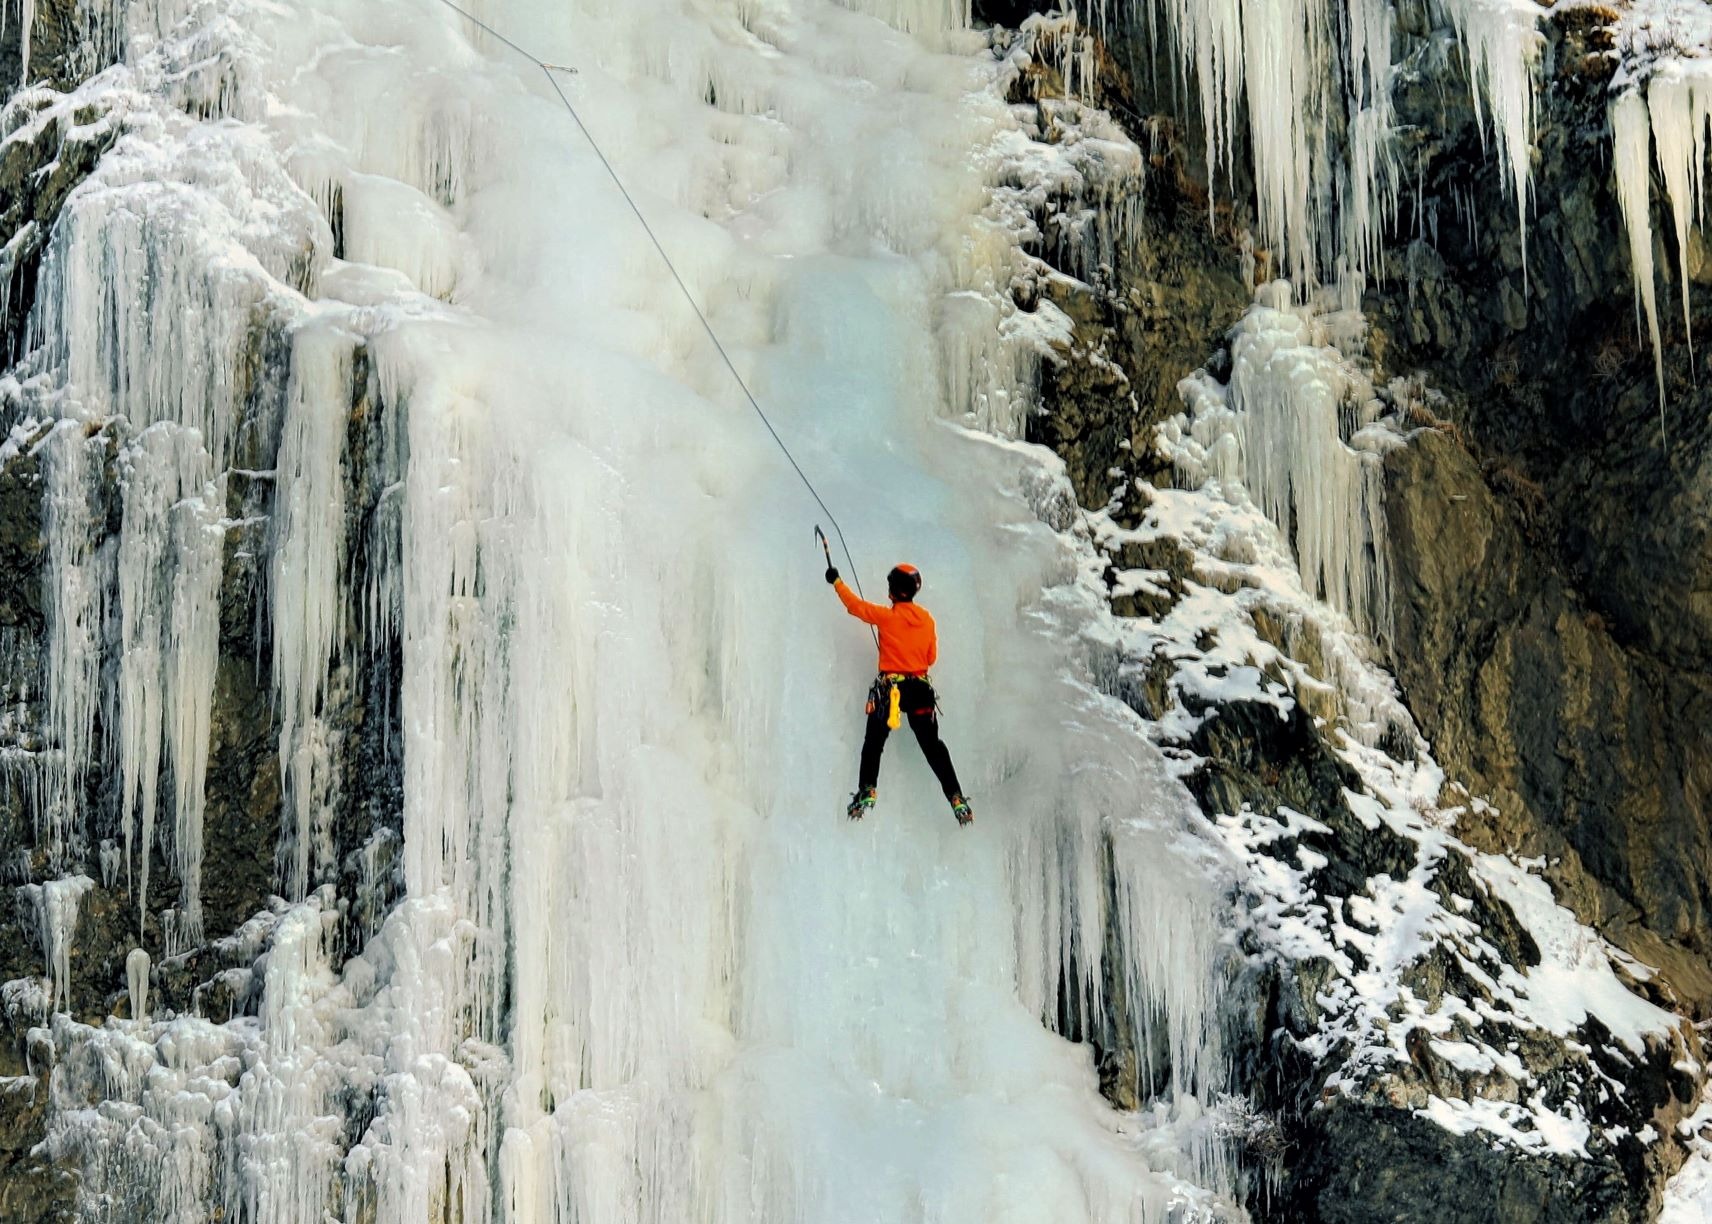 ice climber in orange jacket climbing up frozen waterfall